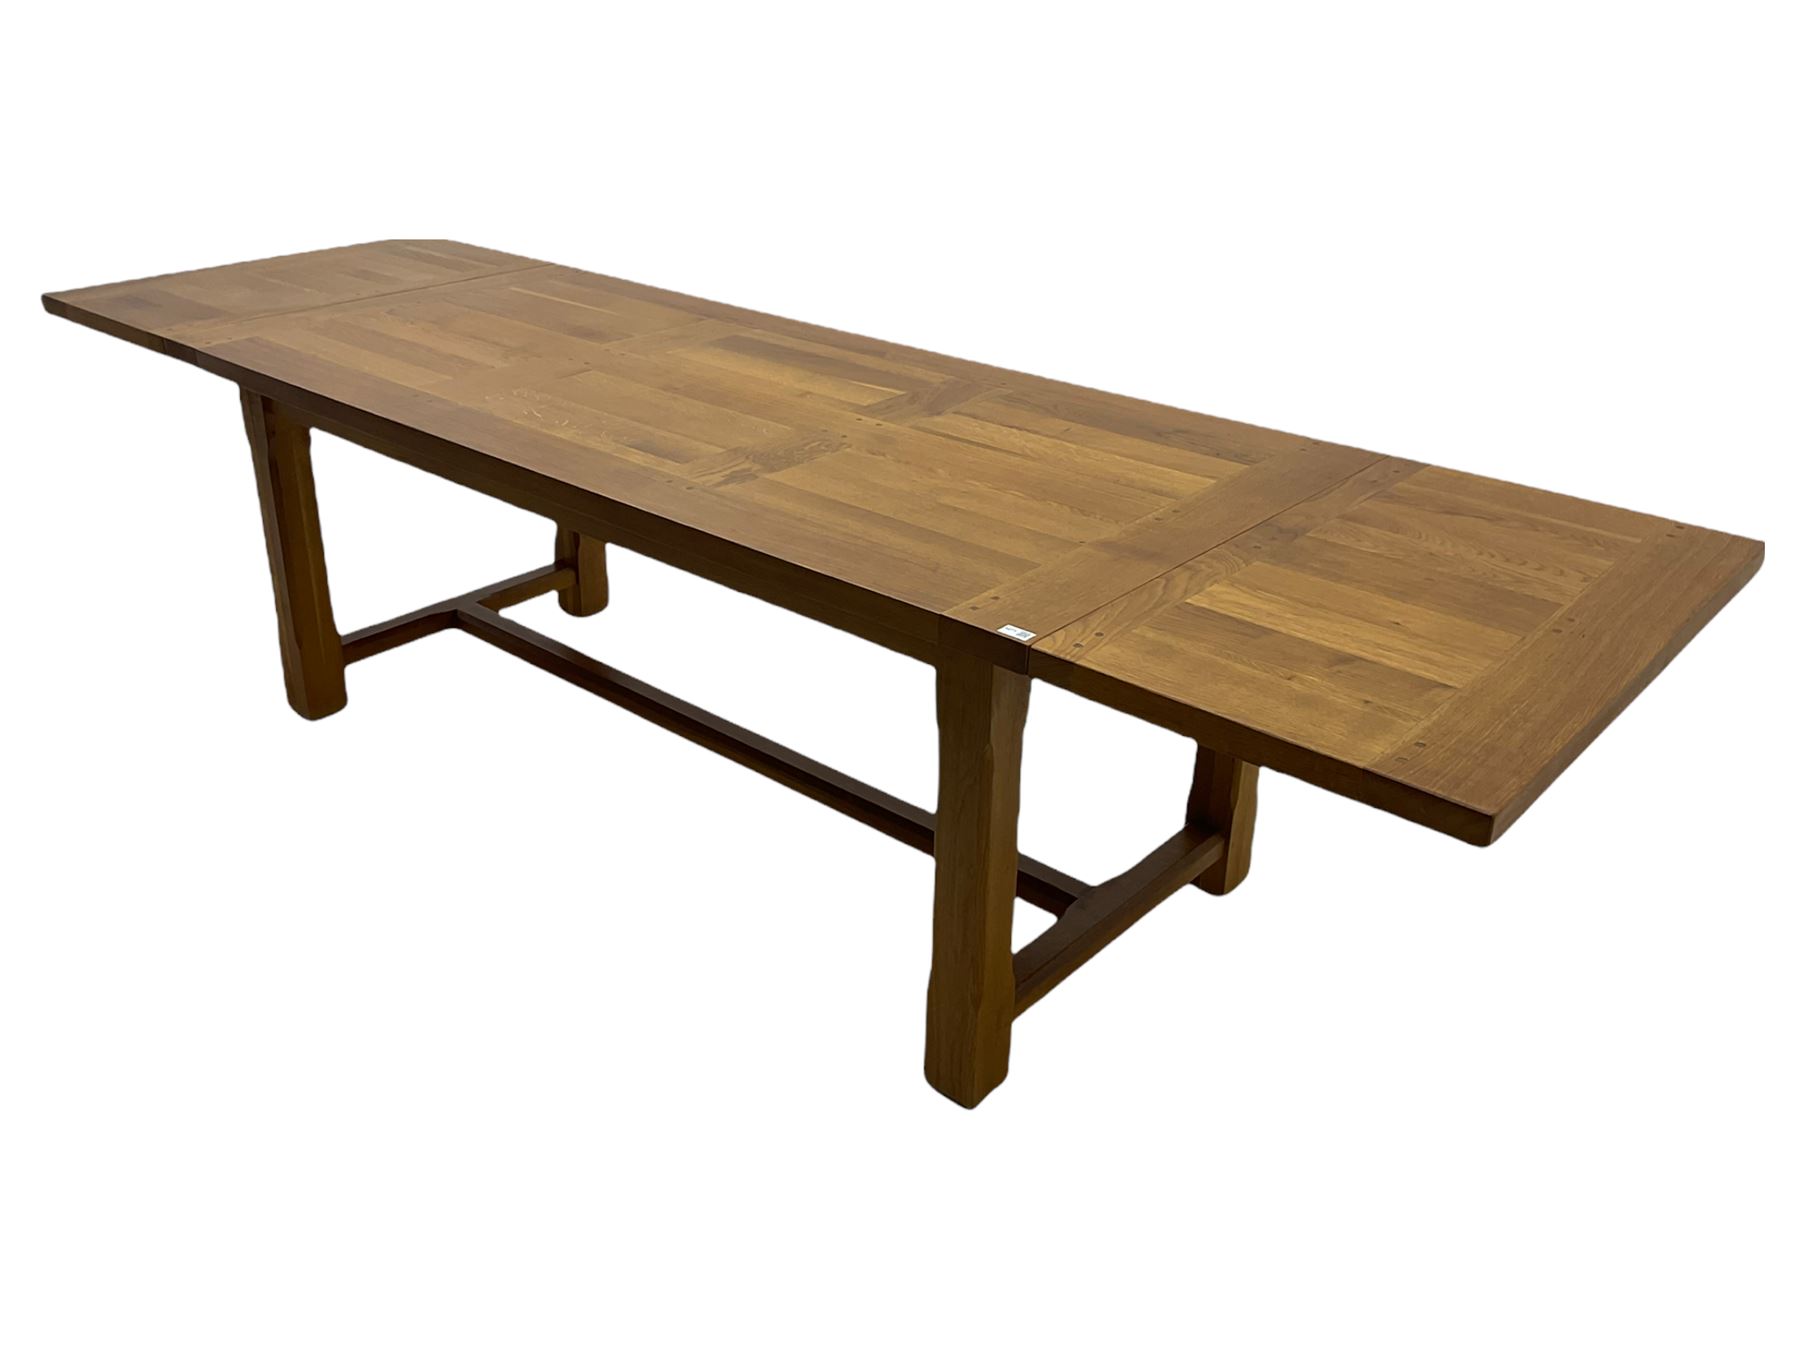 Manor Oak - light oak rectangular dining table - Image 11 of 11